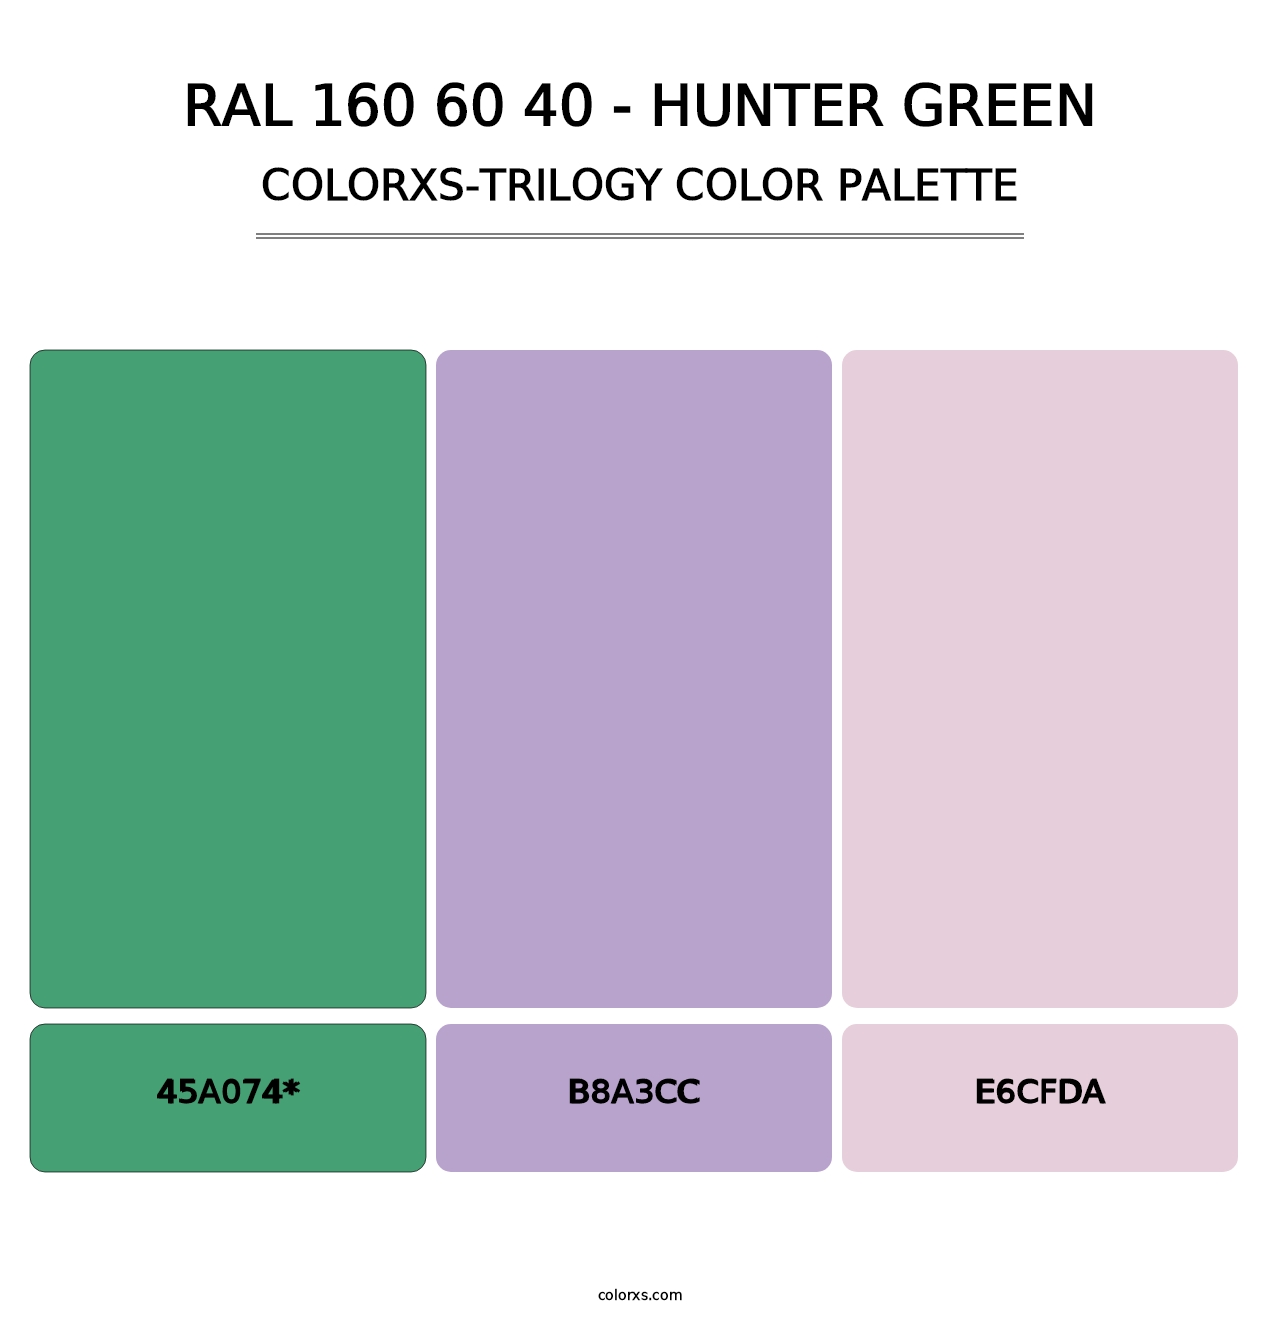 RAL 160 60 40 - Hunter Green - Colorxs Trilogy Palette